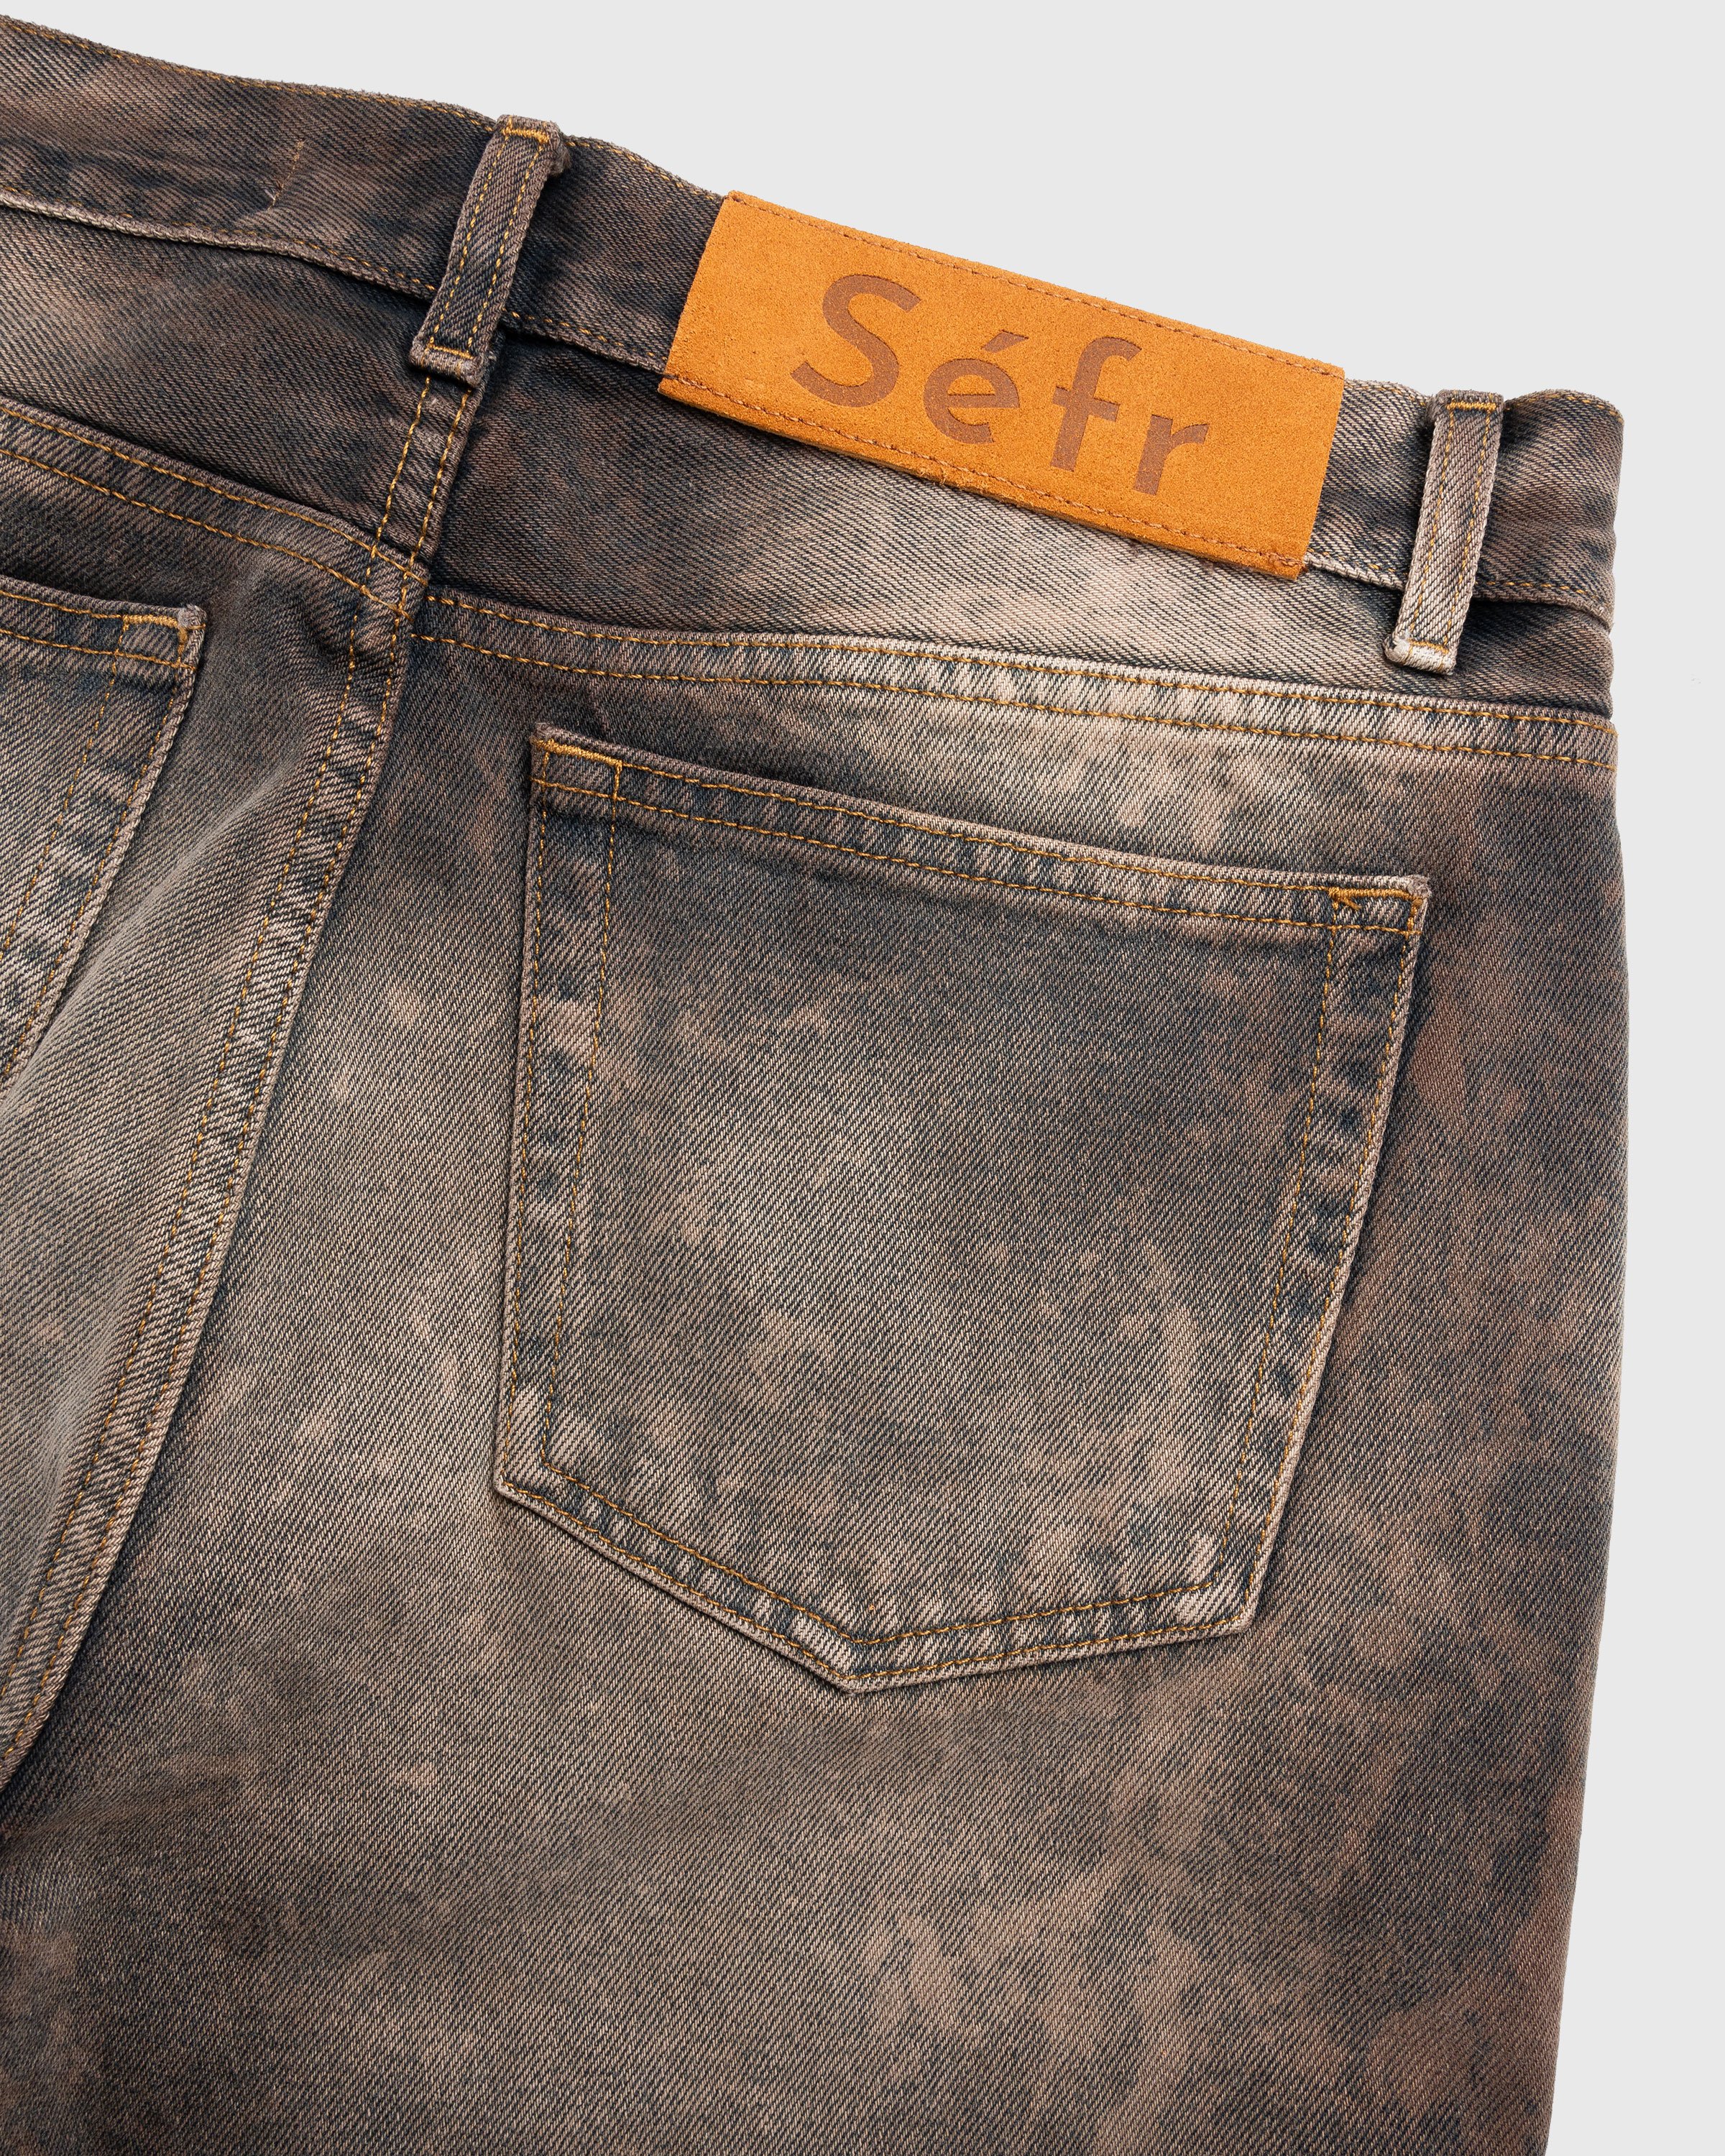 Séfr - Rider Cut Jeans Punk Wash - Clothing - Multi - Image 6